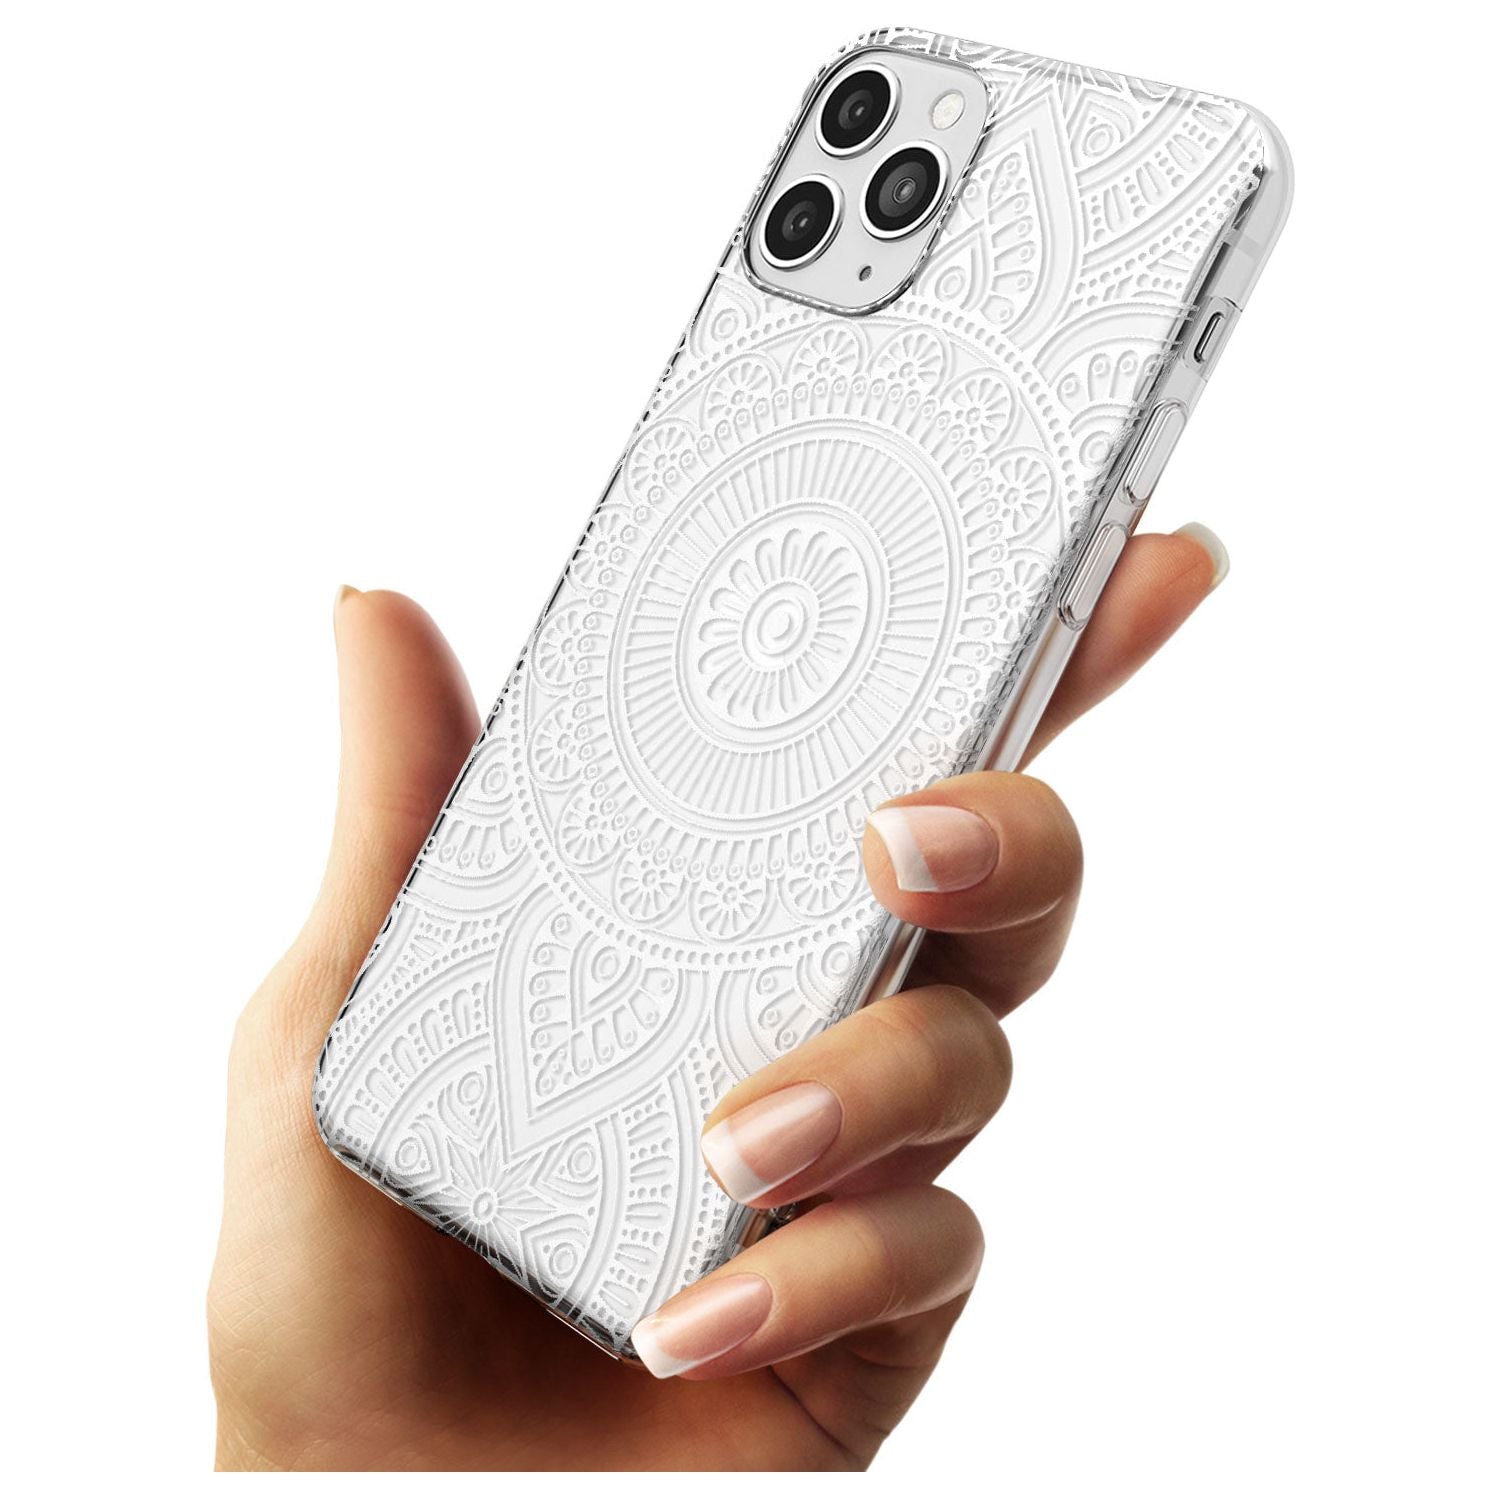 White Henna Flower Wheel Slim TPU Phone Case for iPhone 11 Pro Max